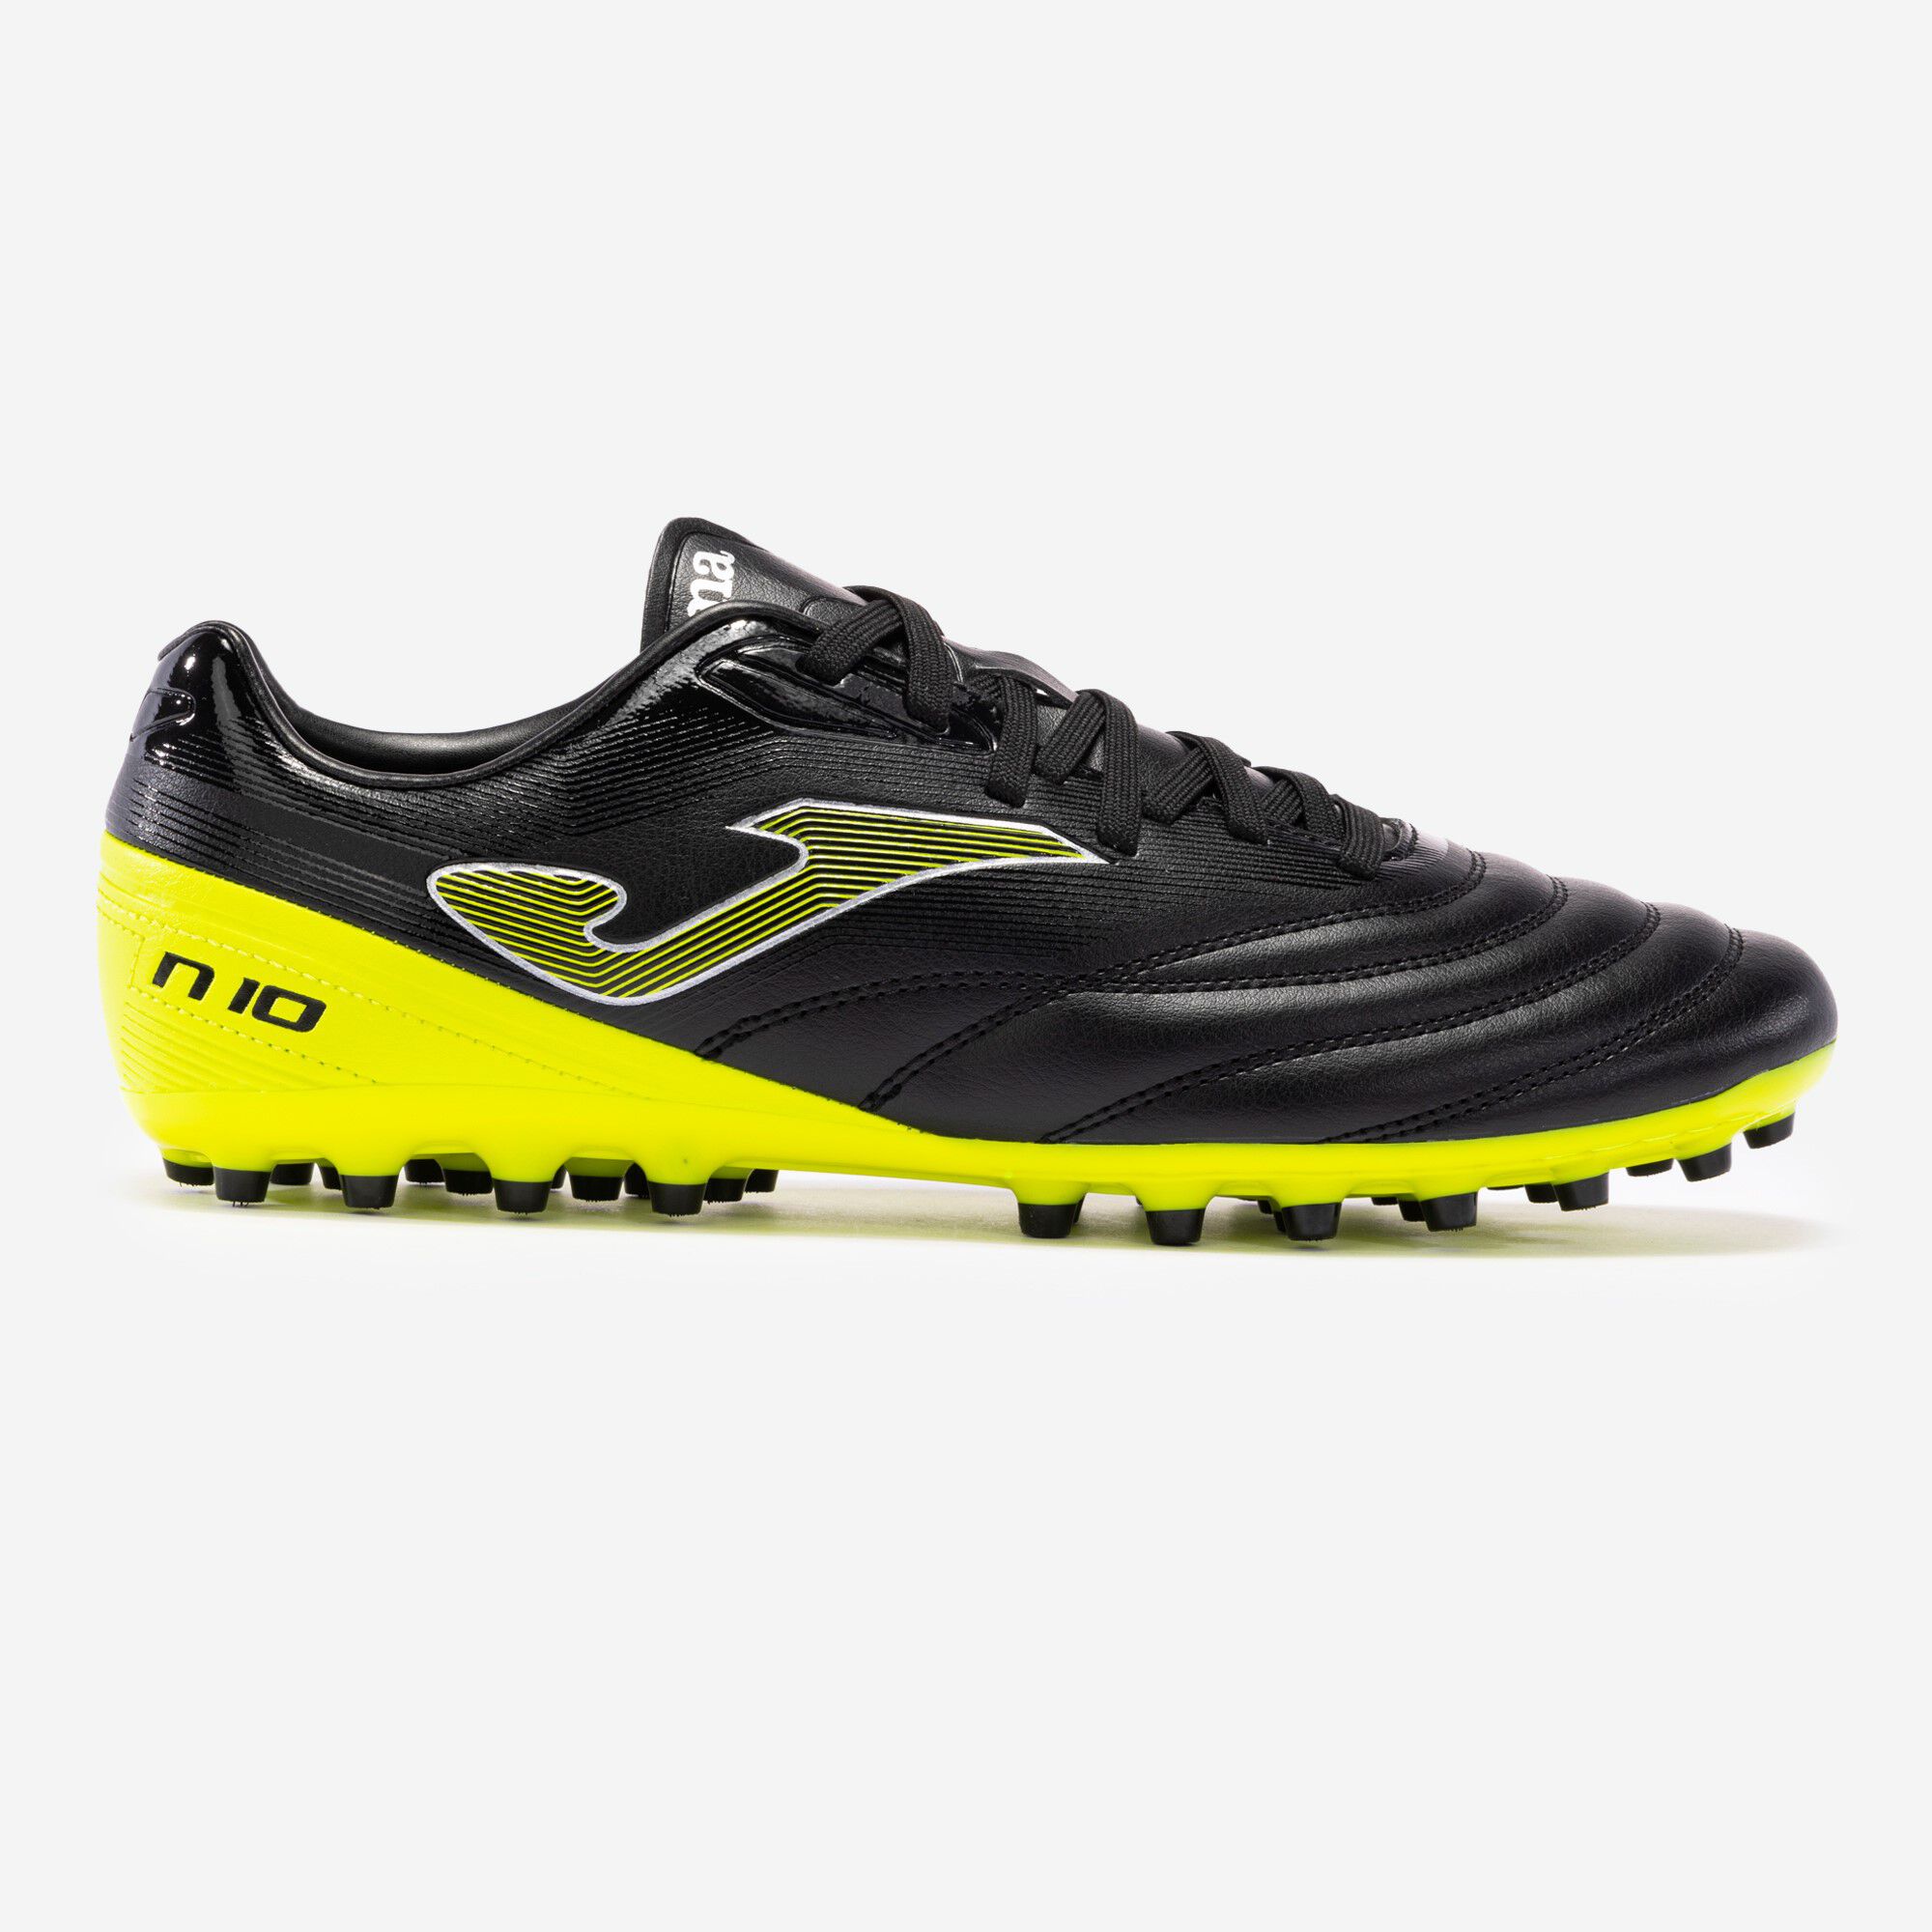 Chaussures football Numero-10 23 gazon synthétique AG noir jaune fluo